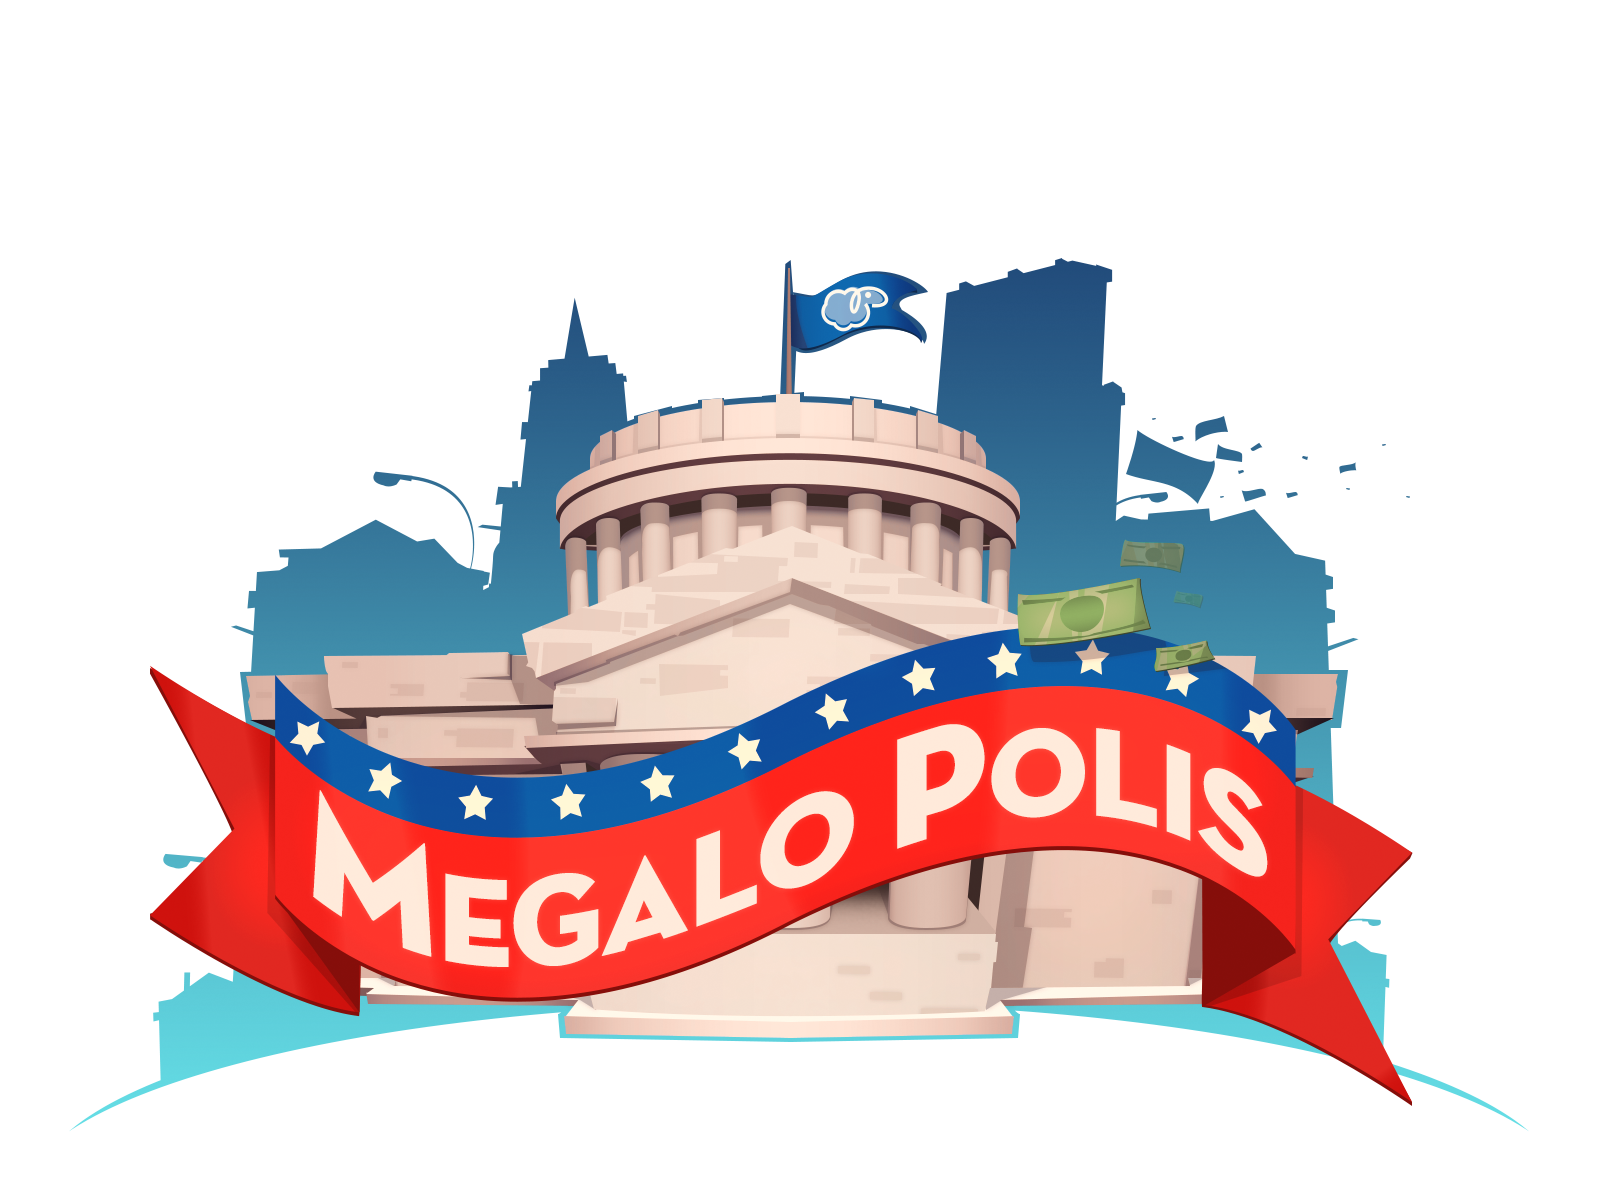 Image of Megalo Polis